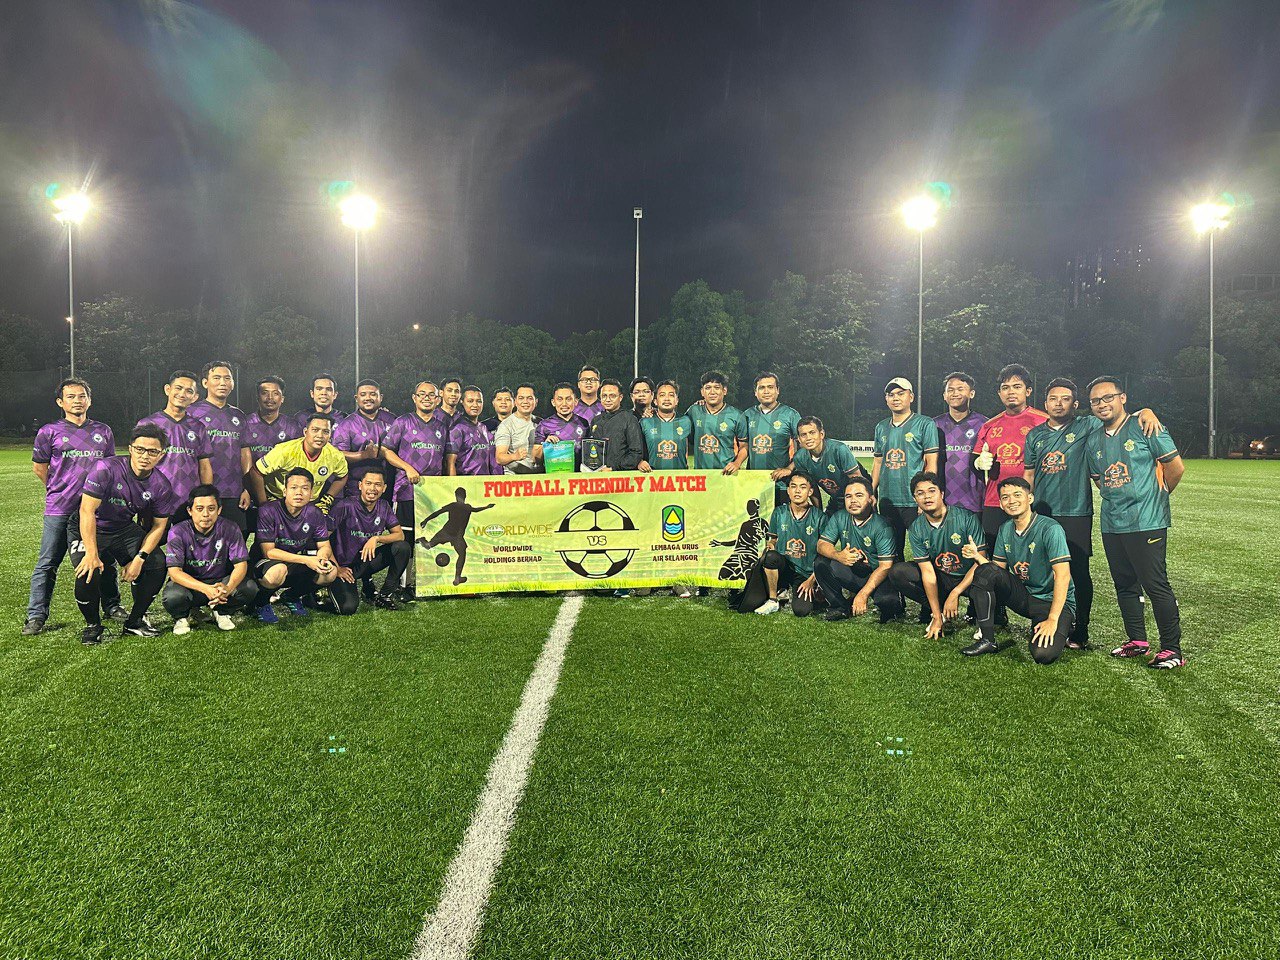 Friendly Football match - Worldwide Environment and LUAS